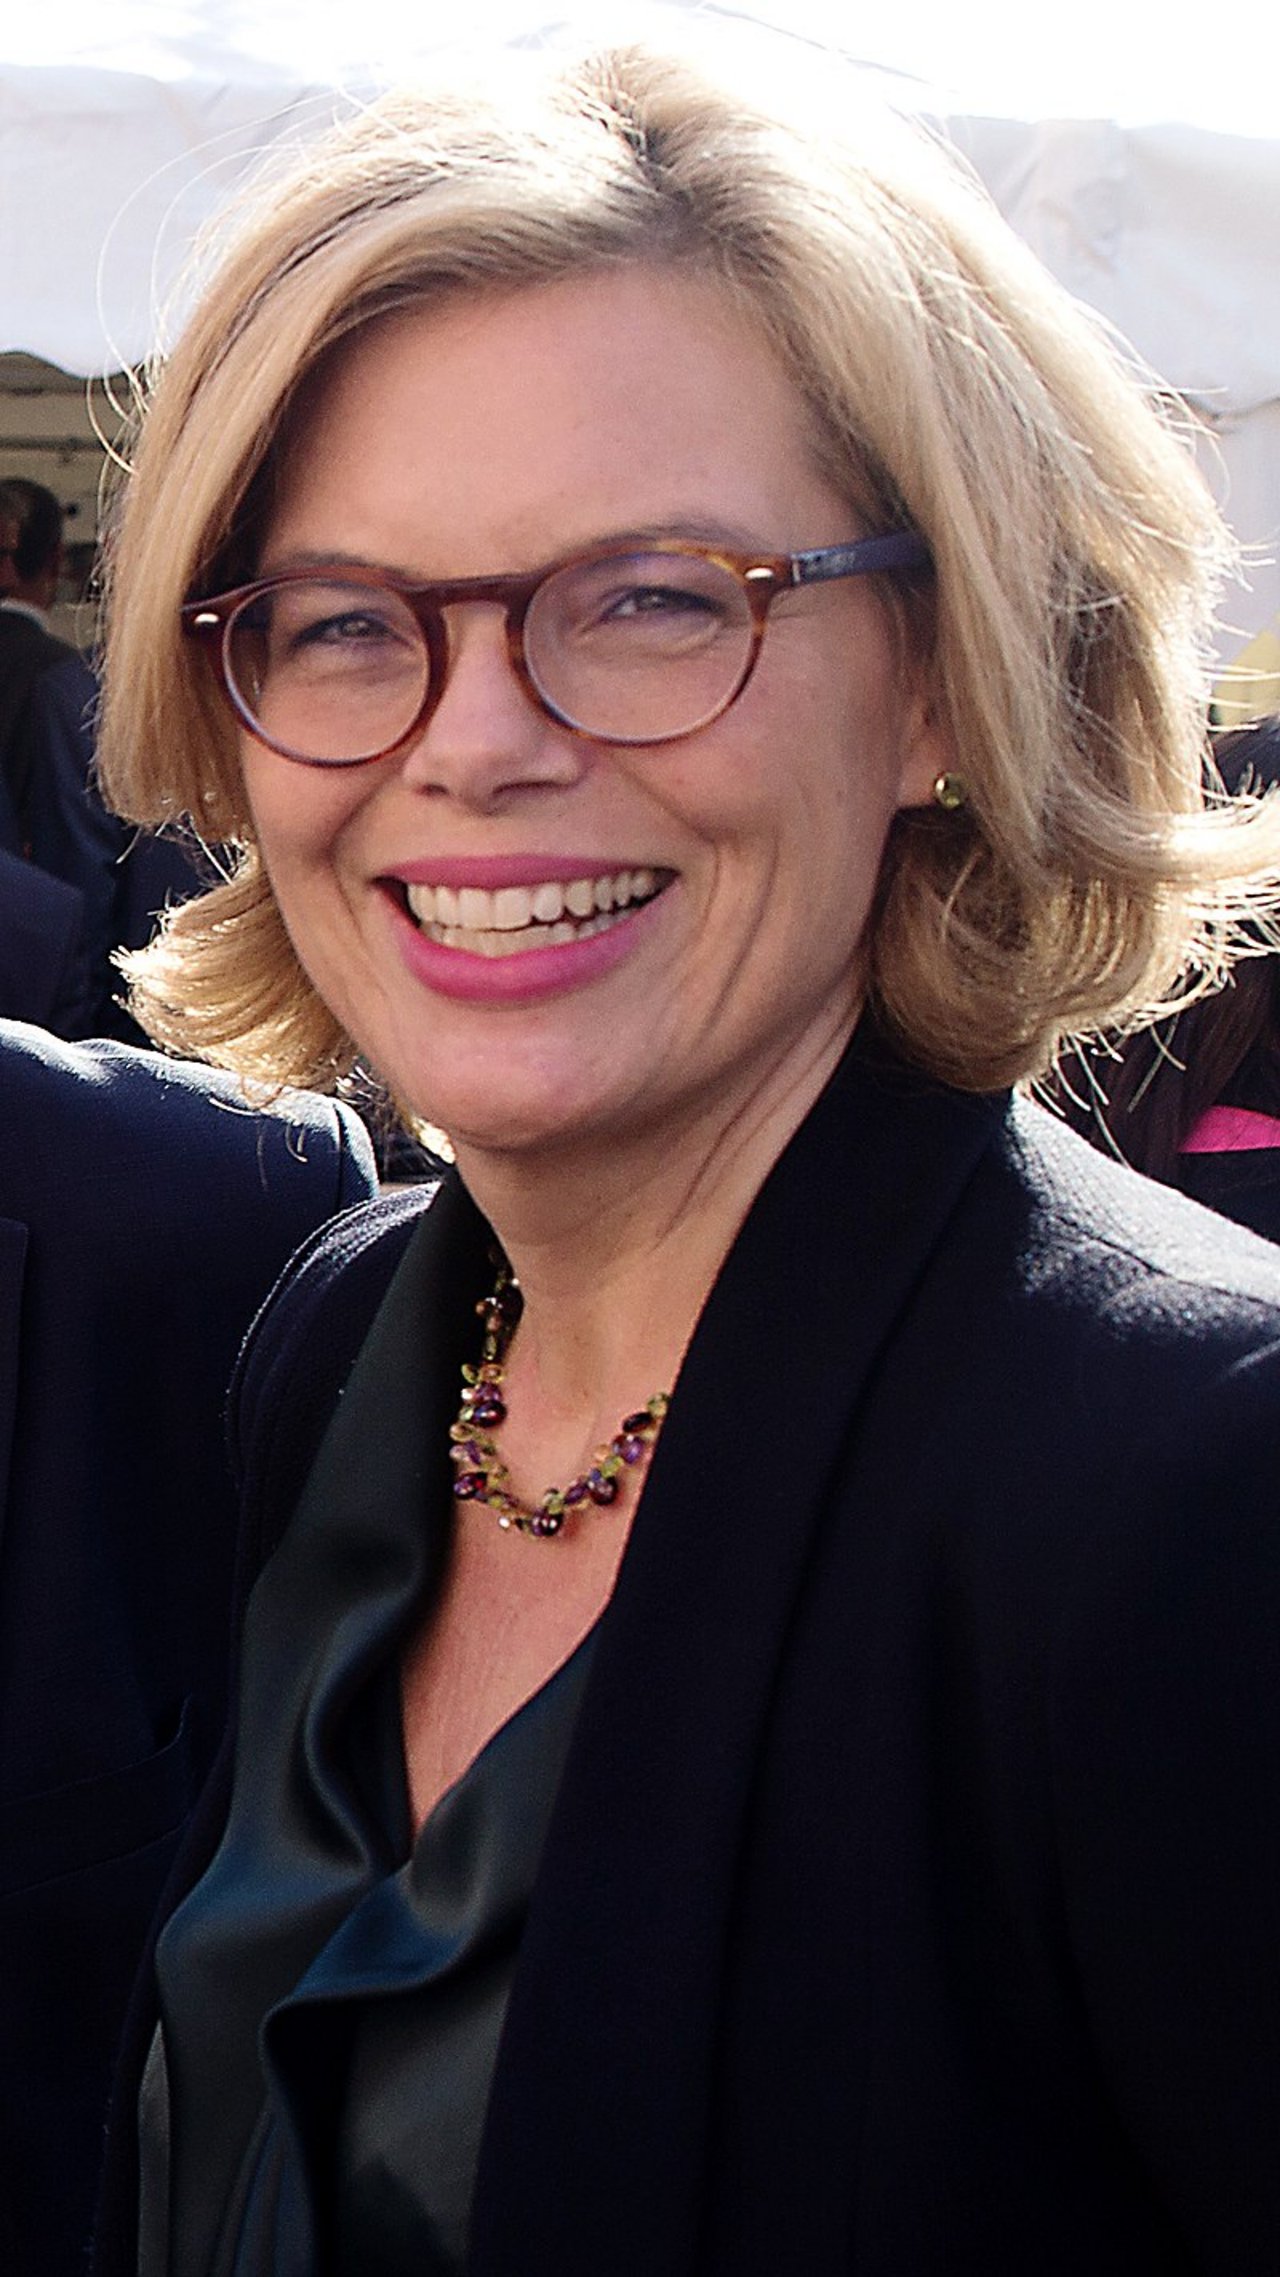 Julia Klöckner im Oktober 2017 an einer Veranstaltung. (BIld Olaf Kosinsky)